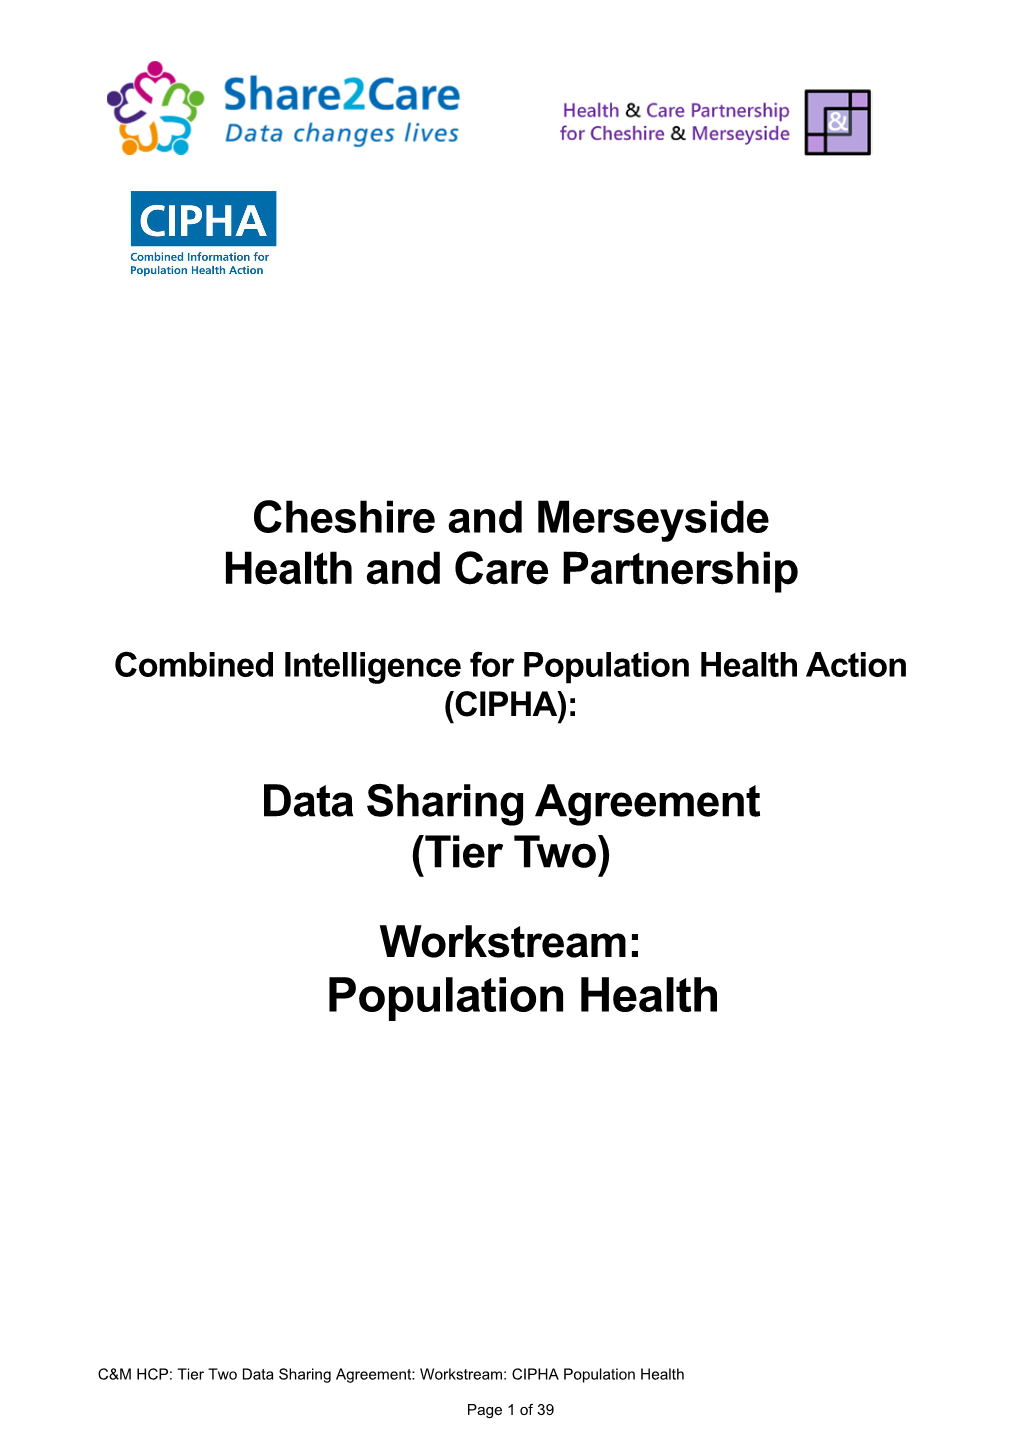 Population Health Action (CIPHA)